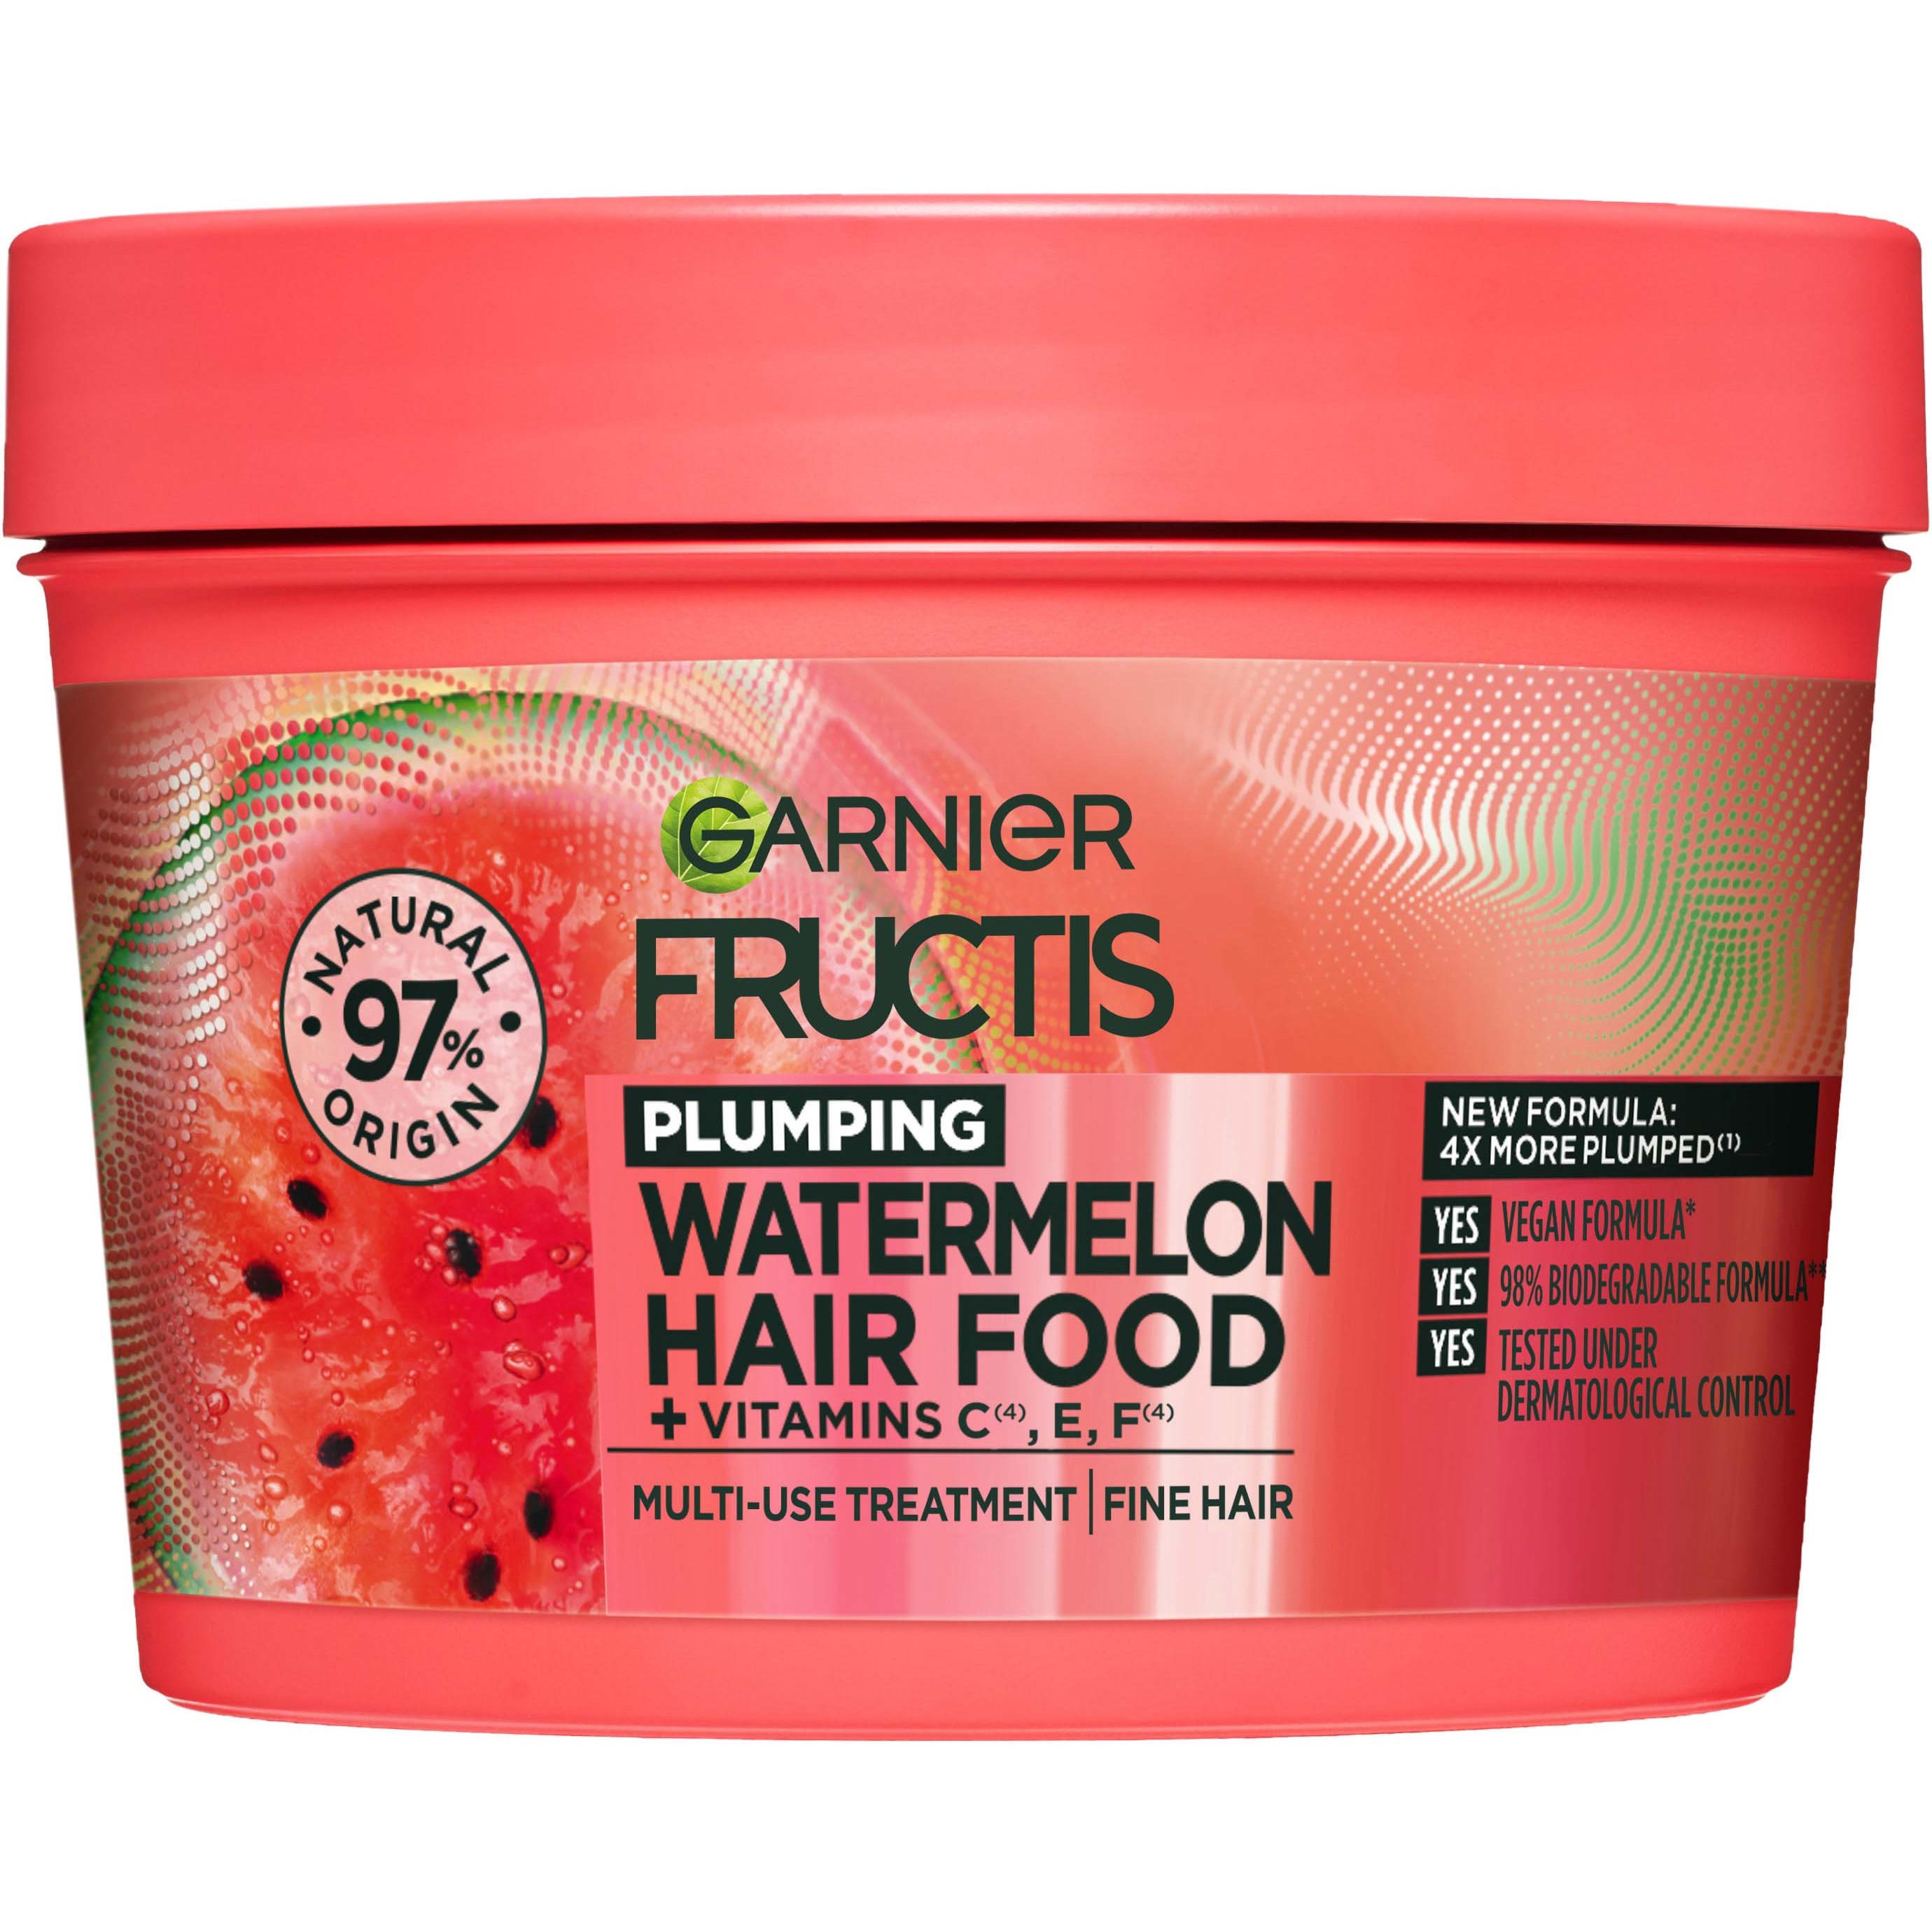 Bilde av Garnier Fructis Watermelon Hair Food Plumping Multi-use Treatment 400